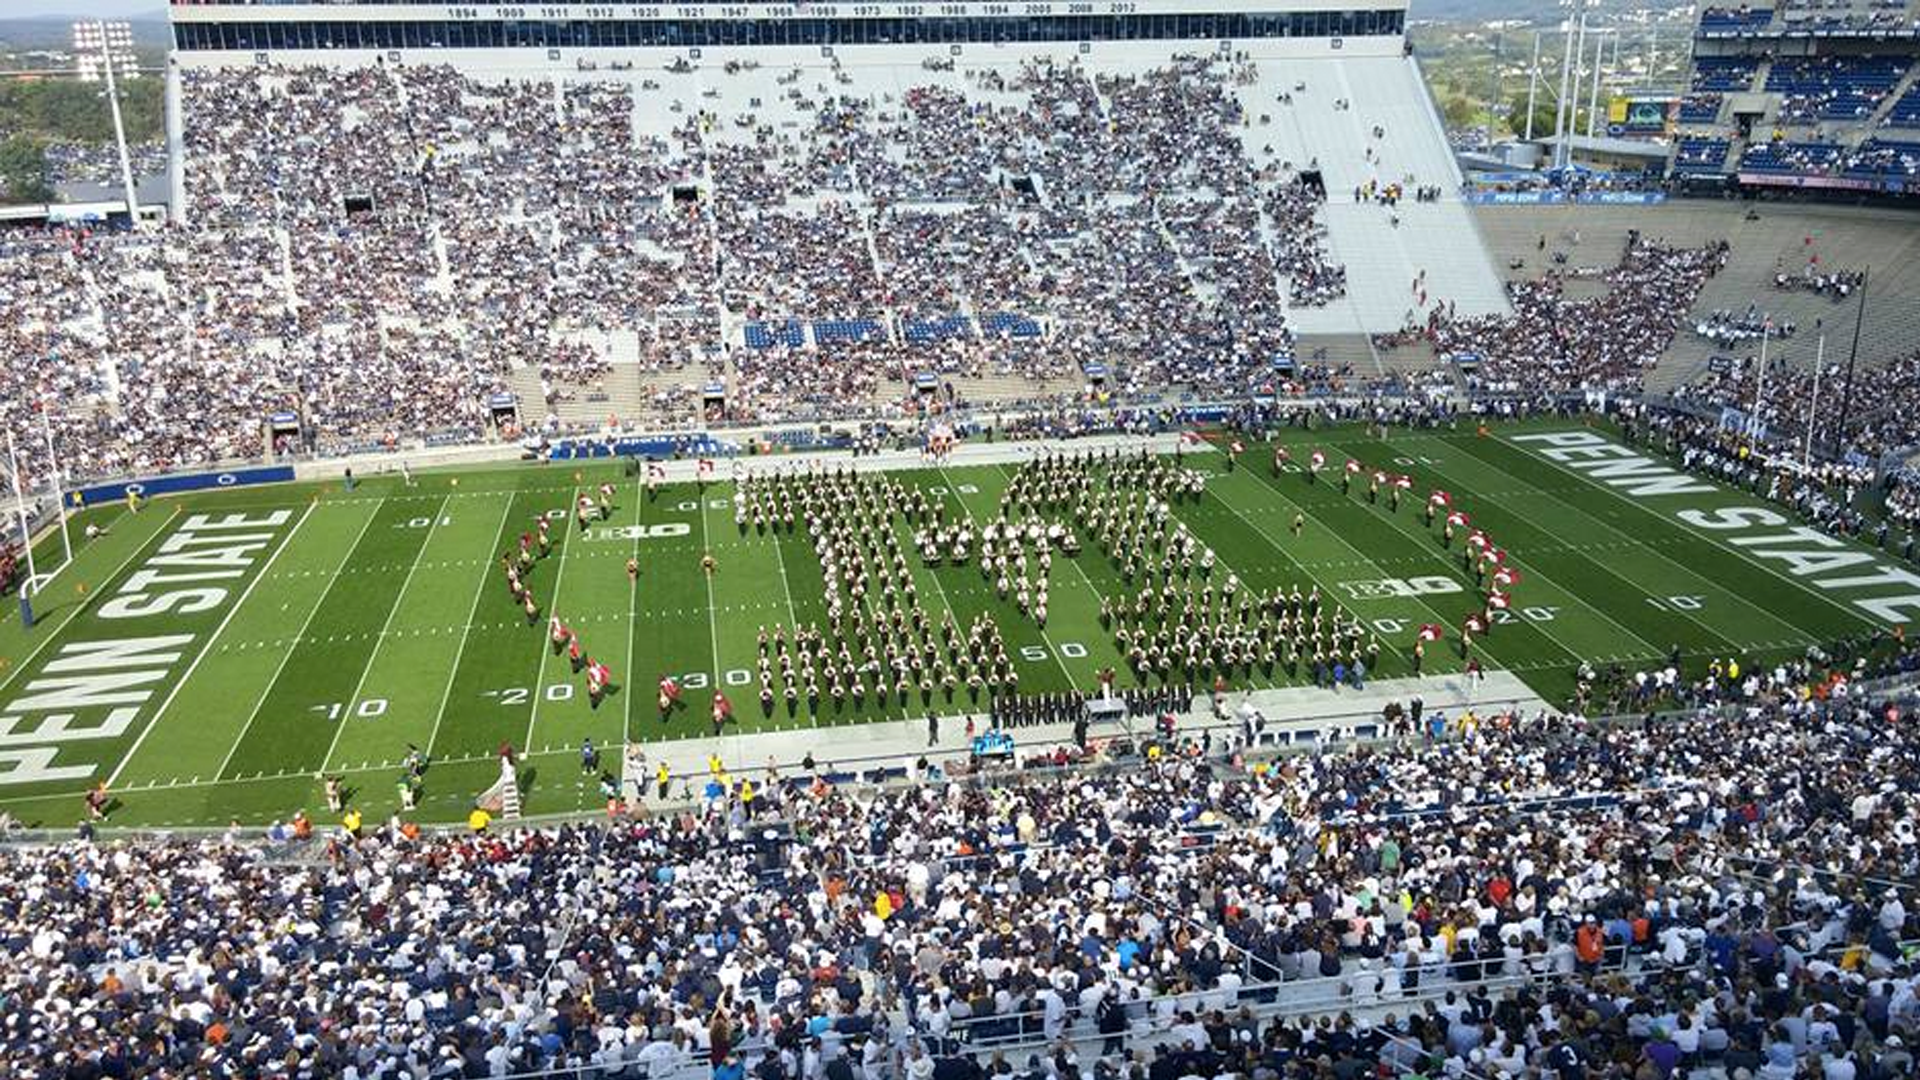 UMass Band performs pregame at Penn State's Beaver Stadium